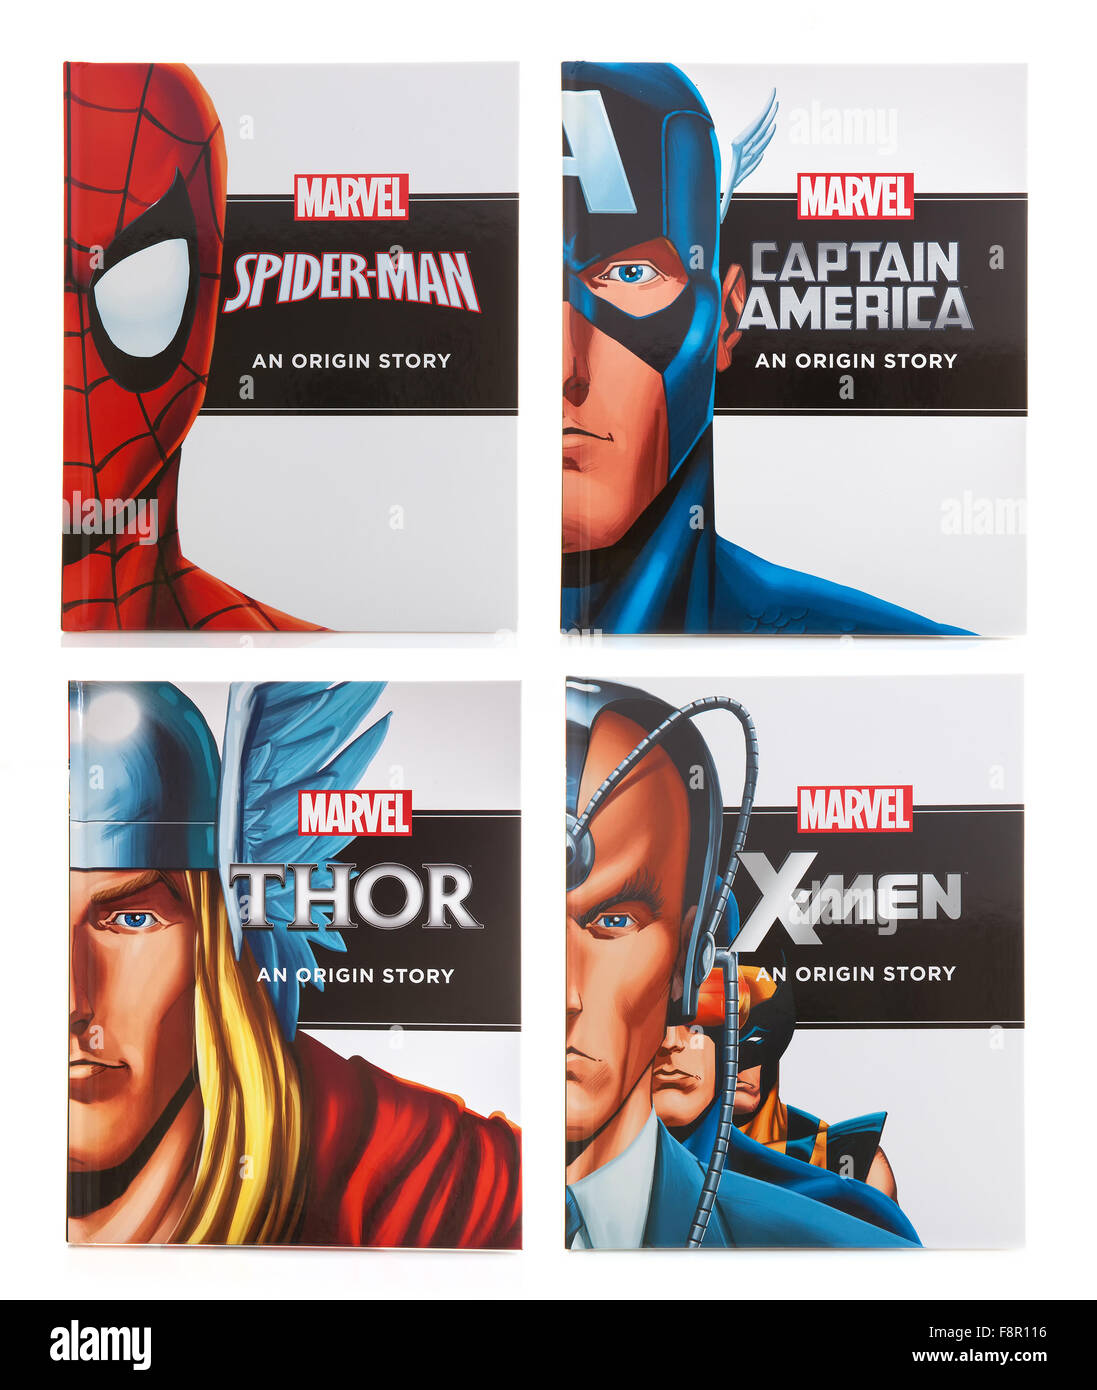 Four MARVEL Super Hero Books 'Origin Story's' on a White background Stock Photo